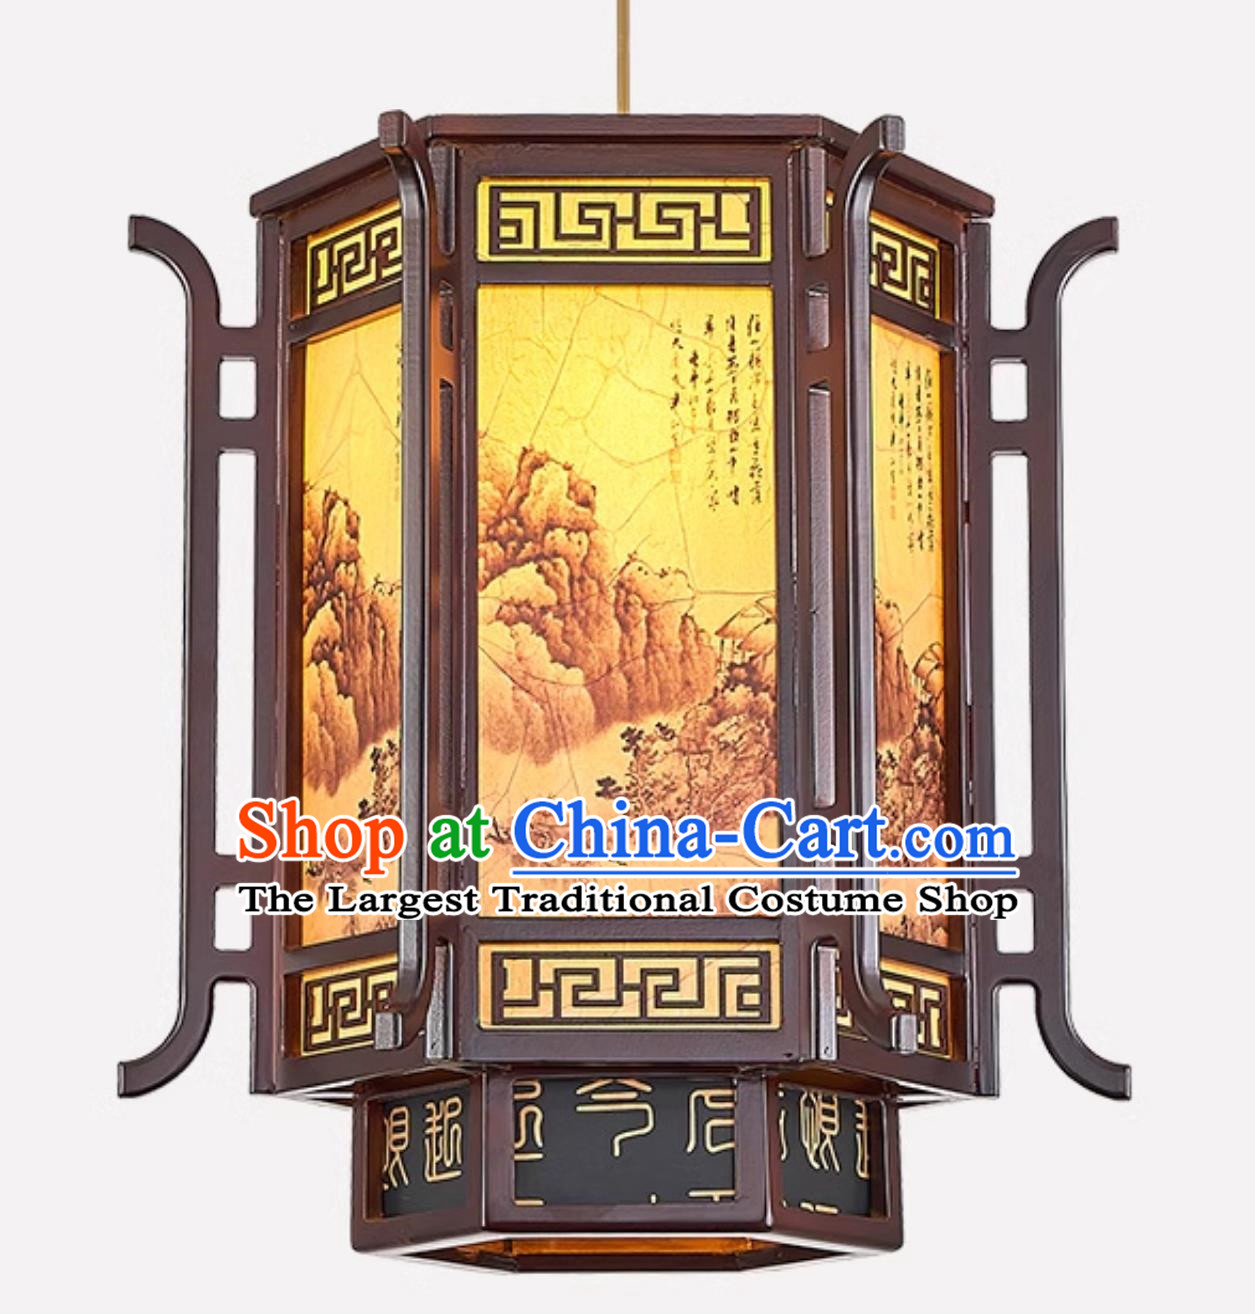 18 Inches High Chinese Lantern Chandelier Antique Tea Room Decoration Wooden Chandelier